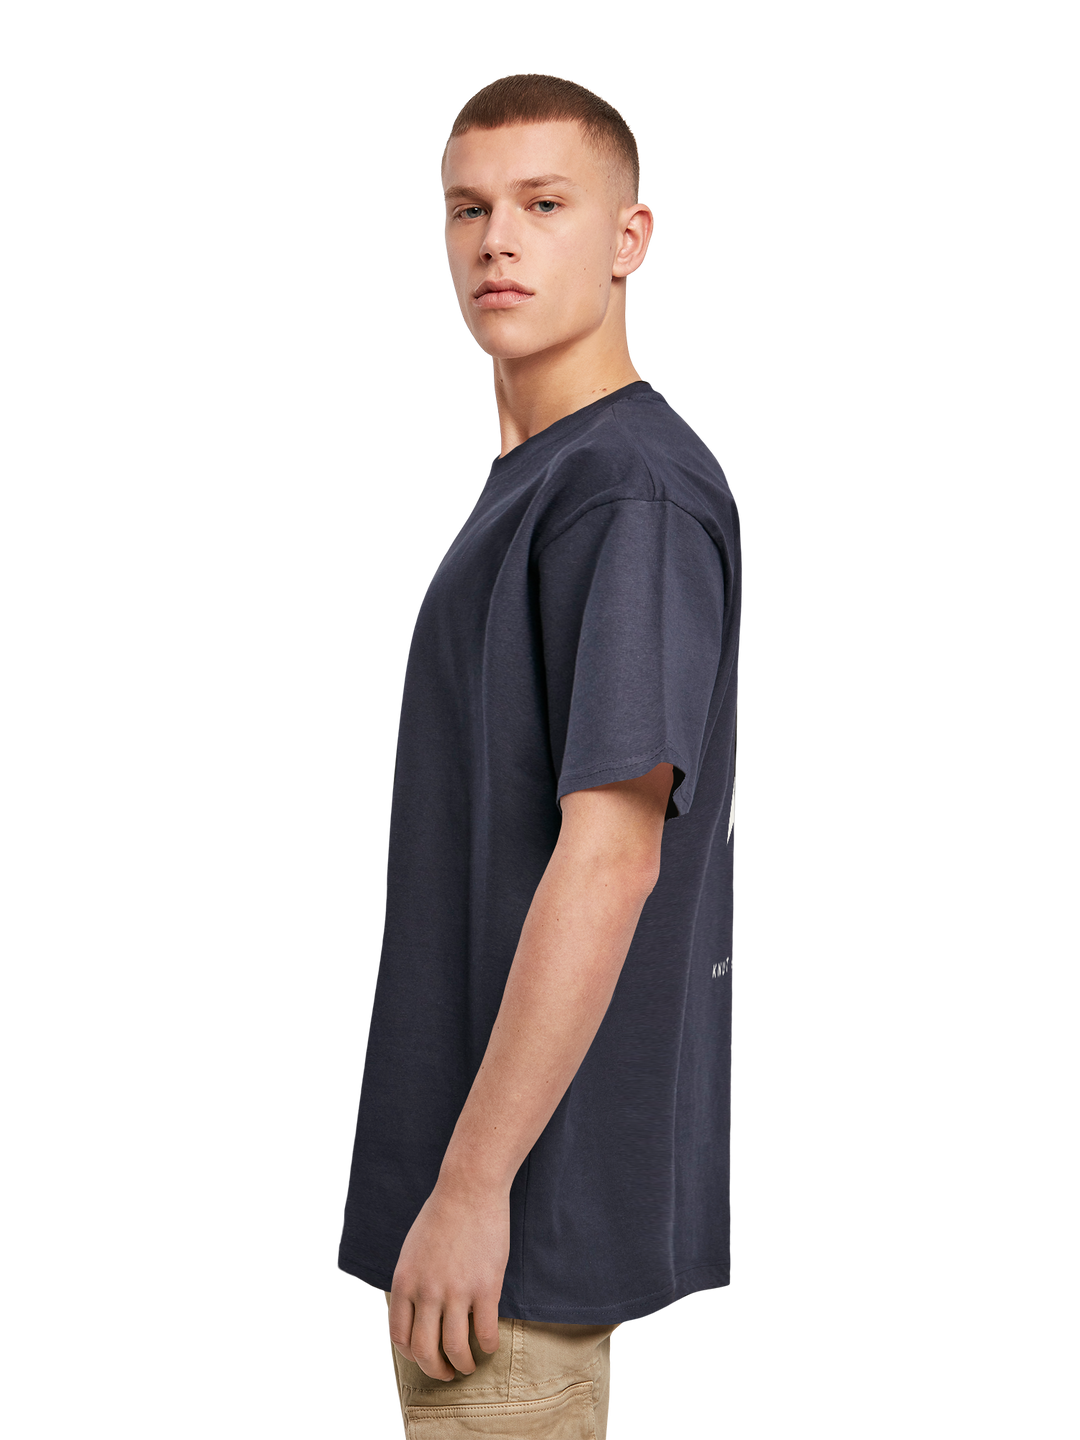 KNUT | Oversize T-Shirt Herren Ahoi Anker